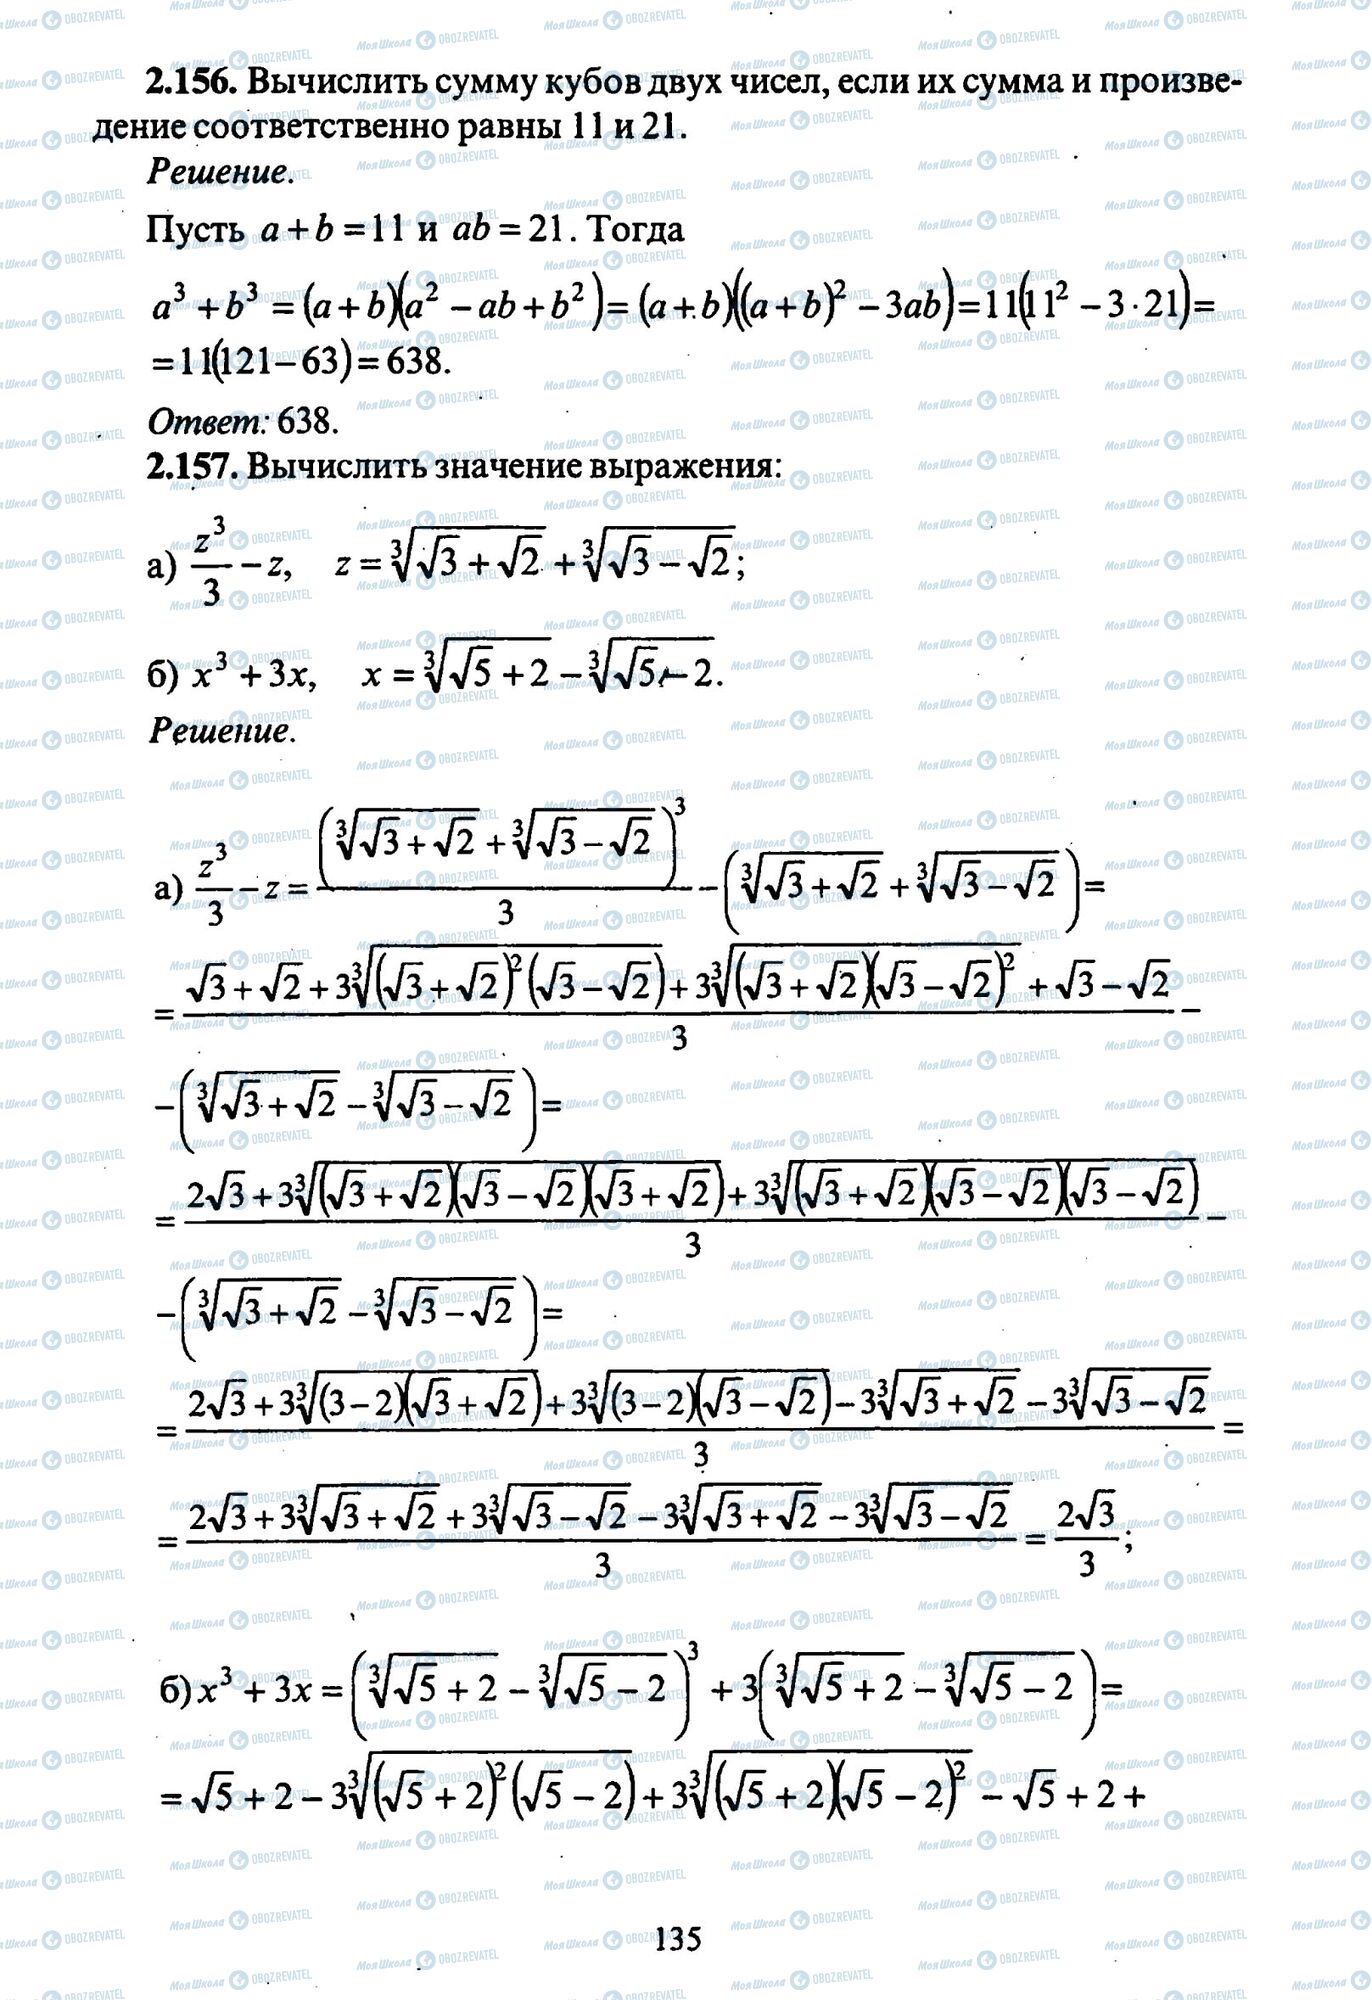 ЗНО Математика 11 класс страница 156